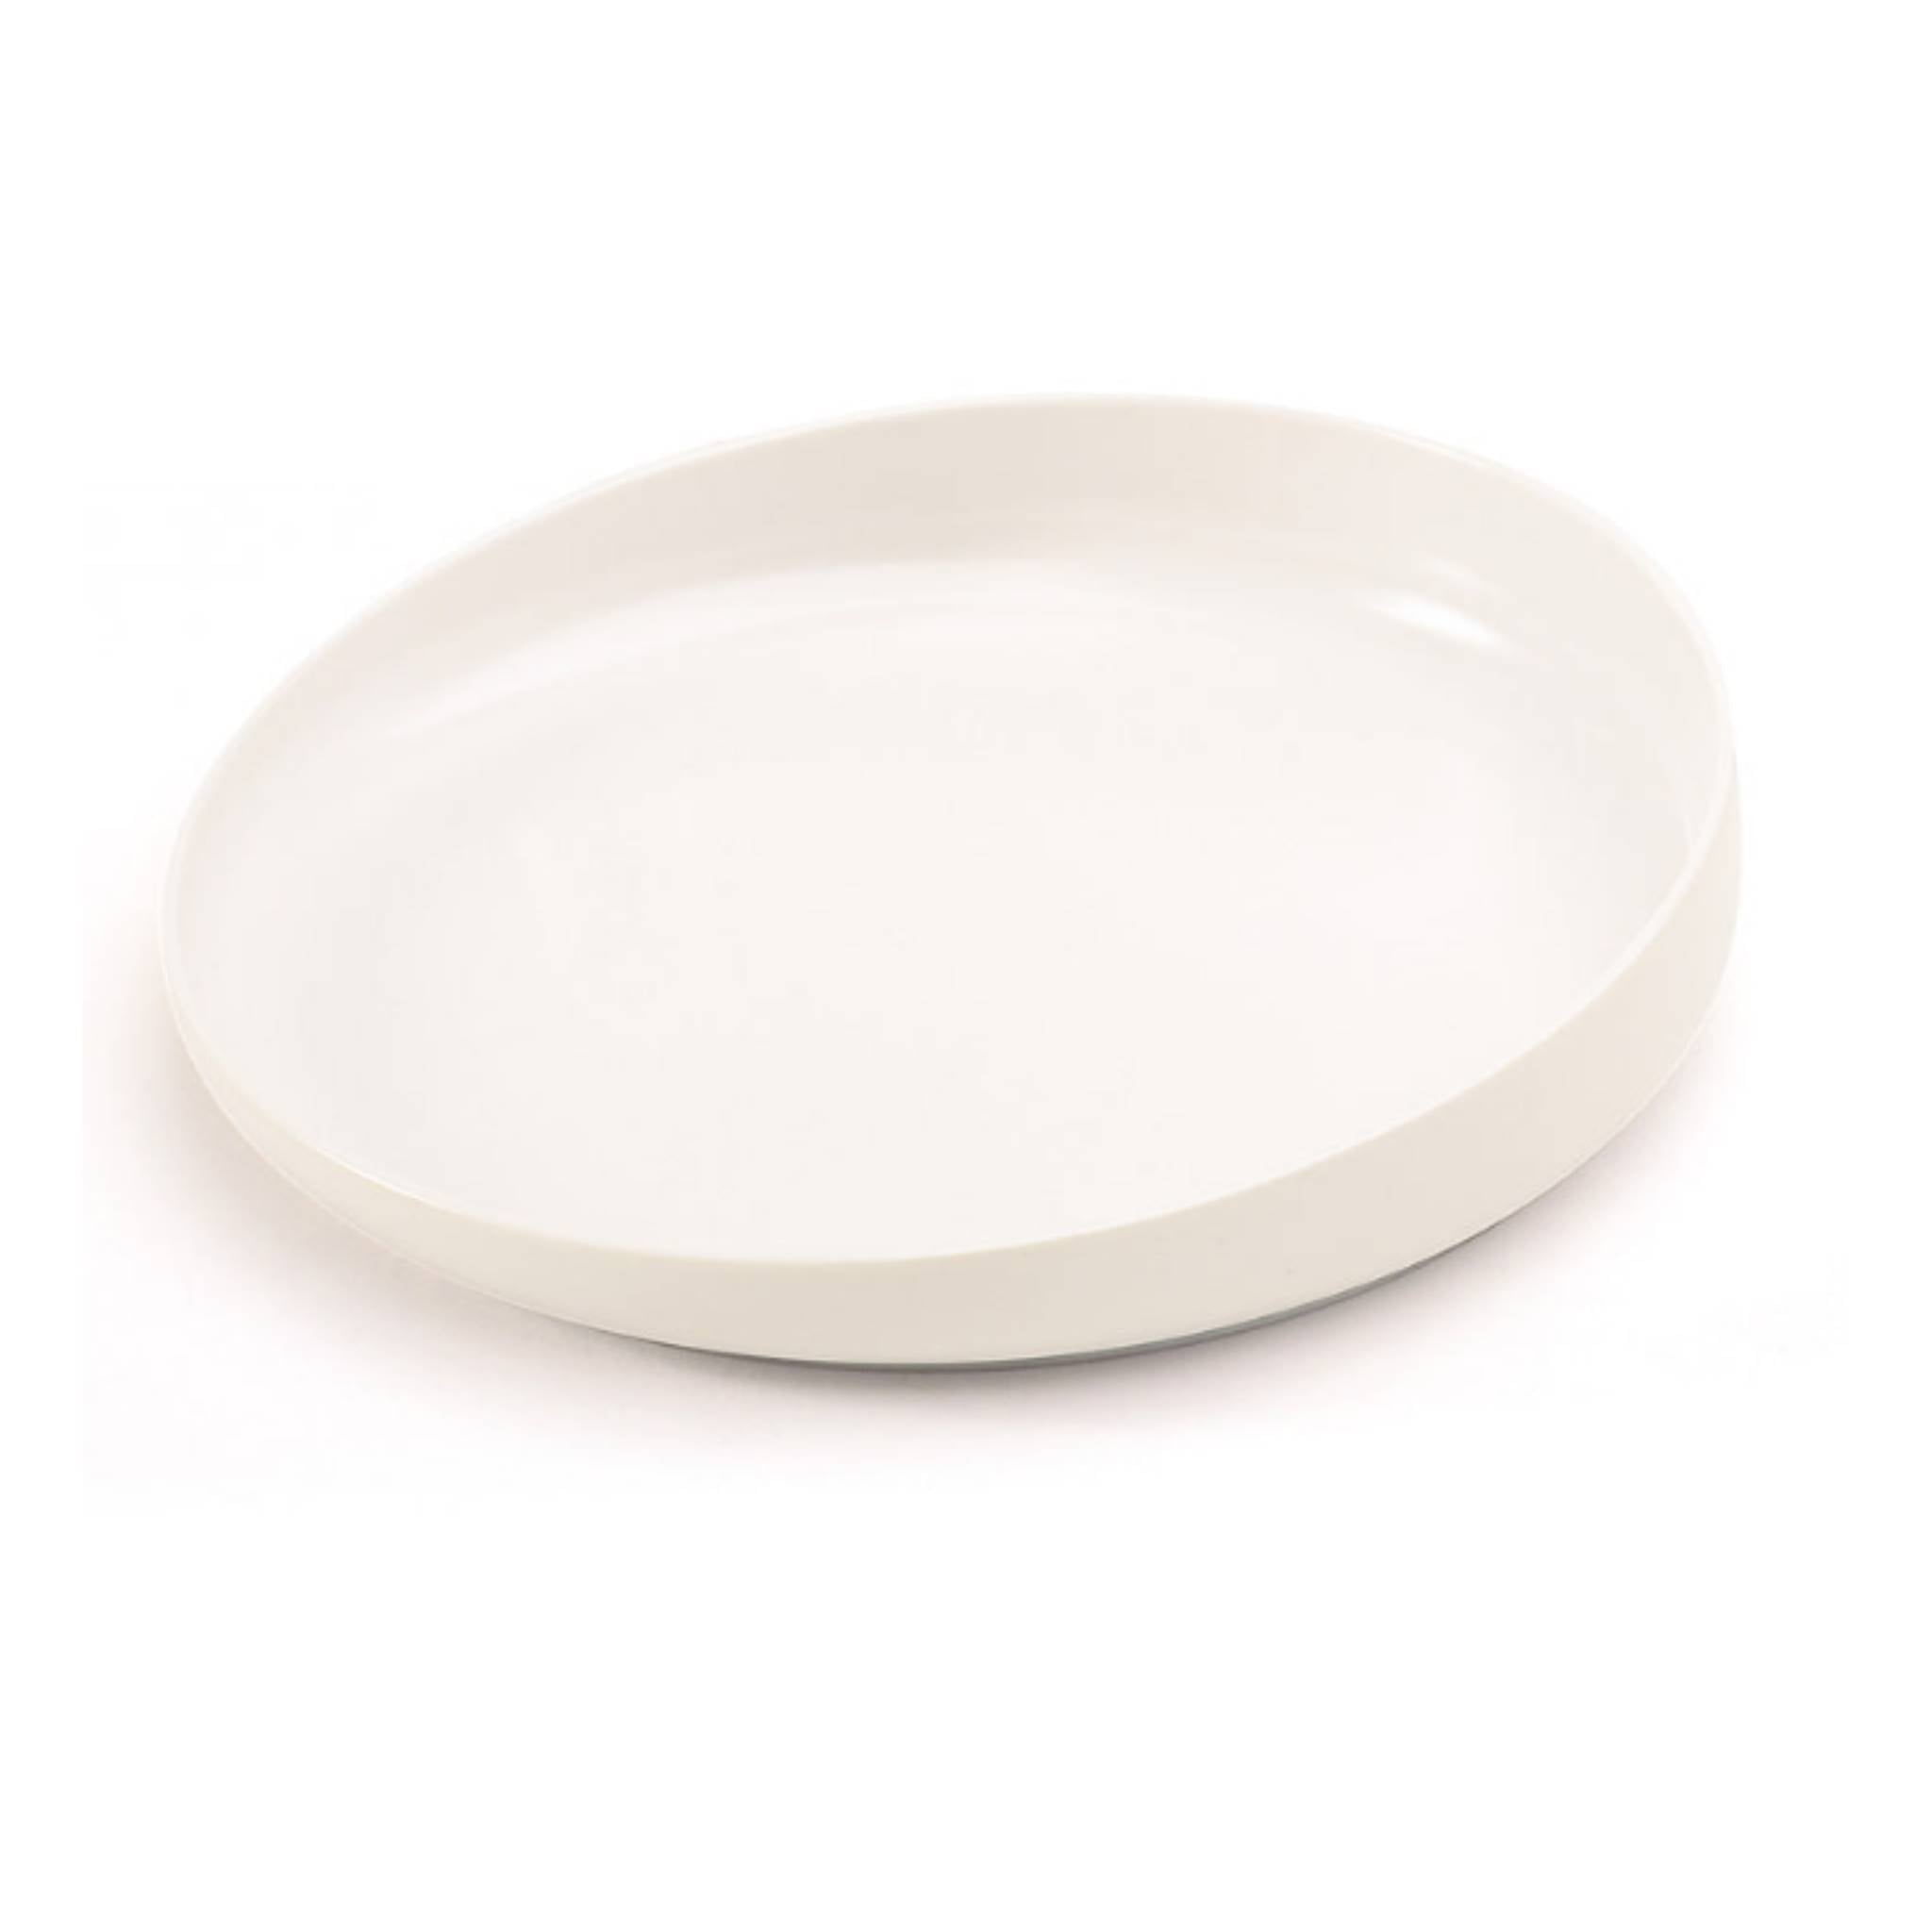 Etac Tasty Plate